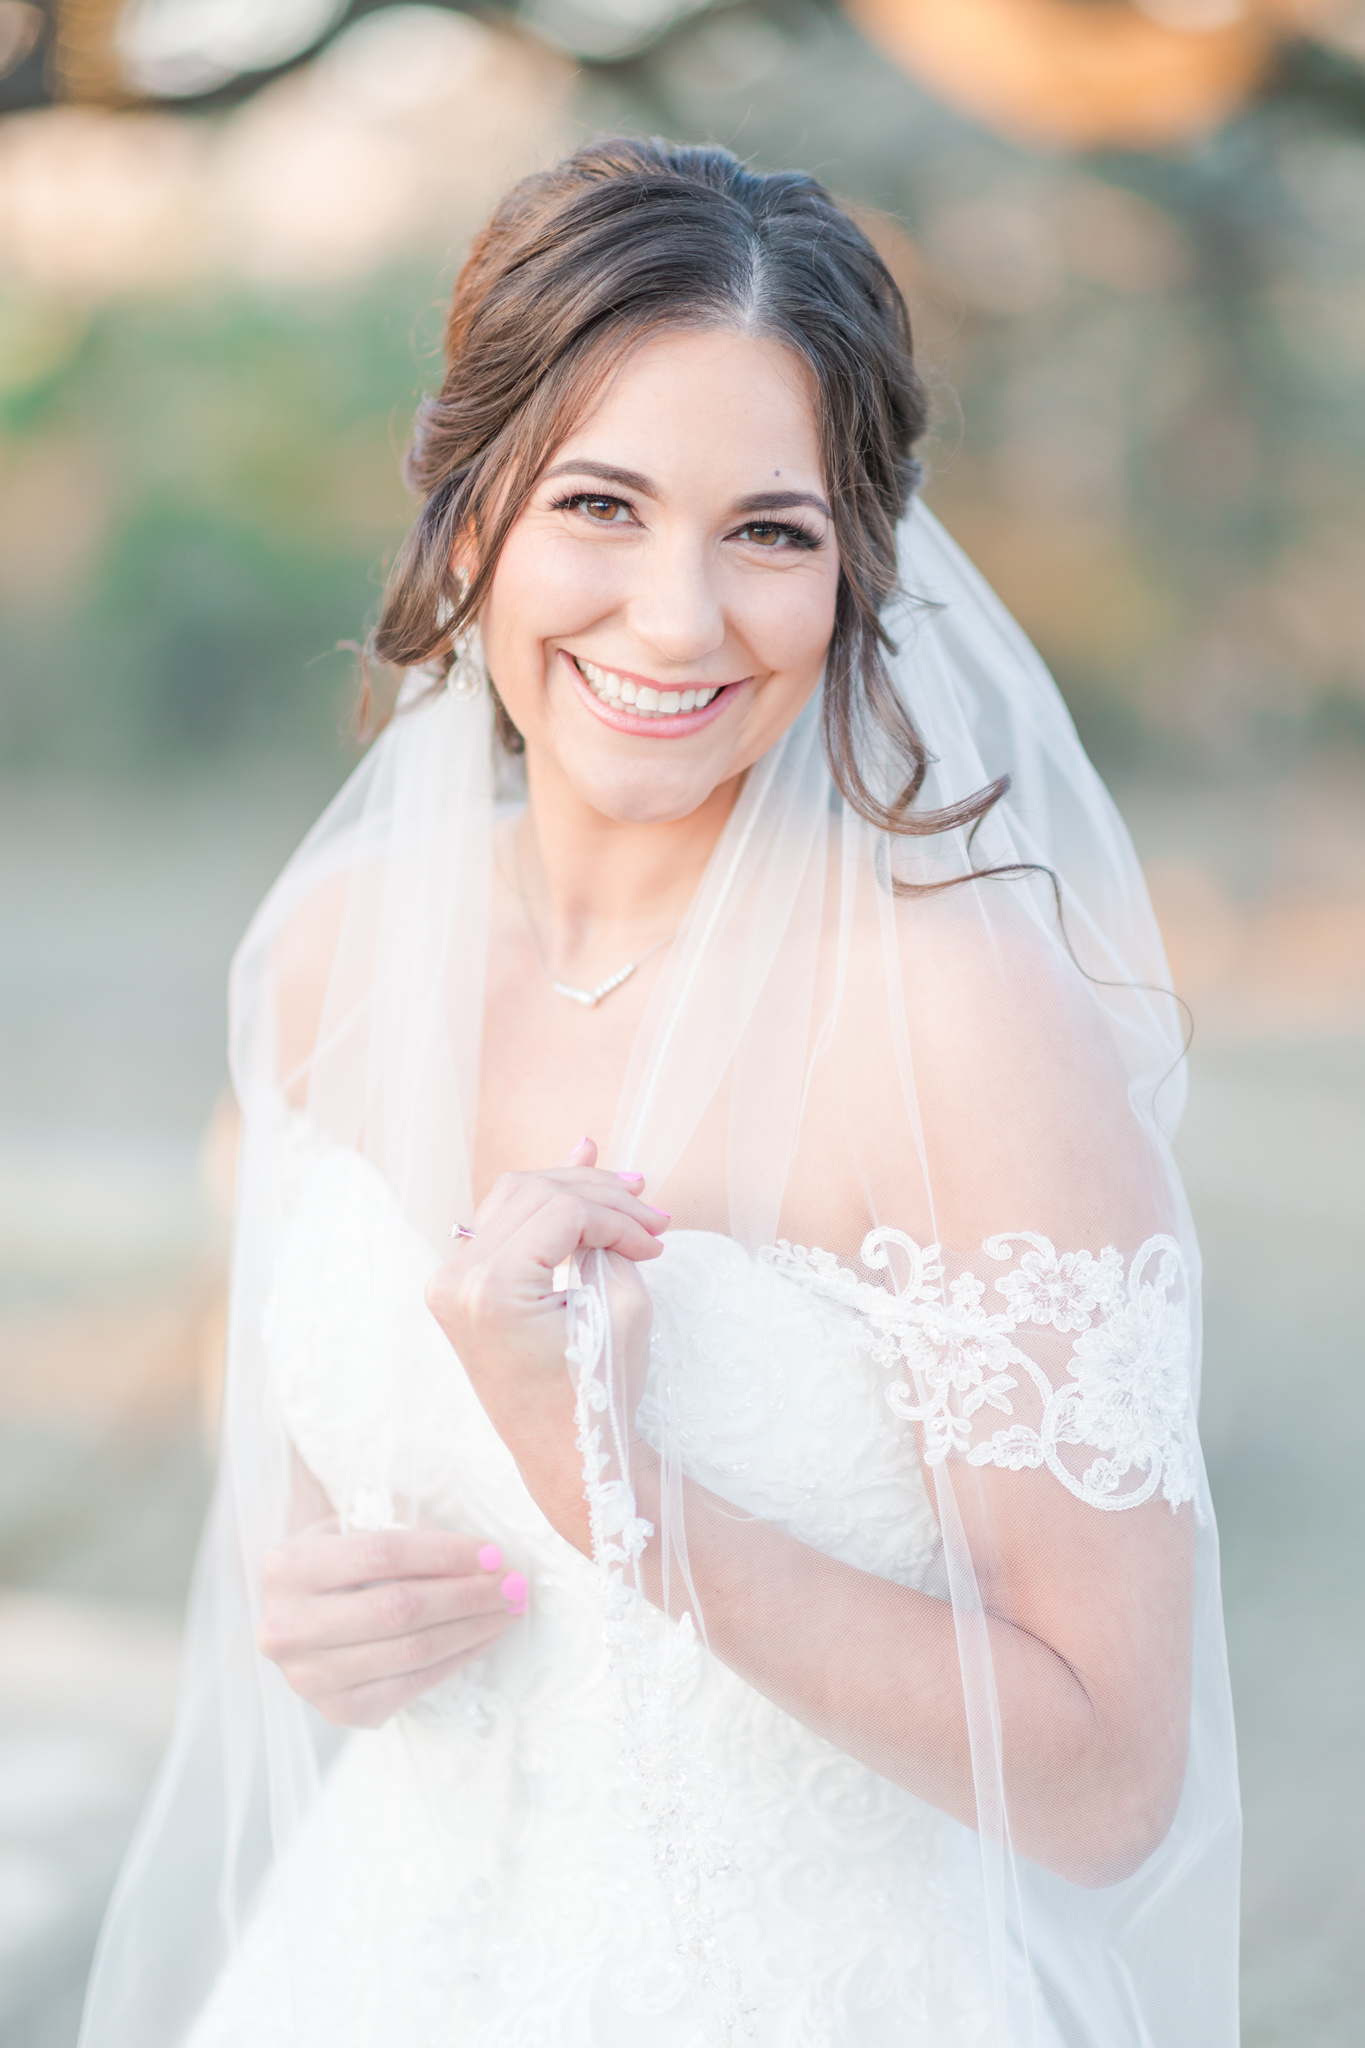 Bridal Session at Camp Lucy in Dripping Springs, TX by Dawn Elizabeth Studios, San Antonio Wedding Photographer